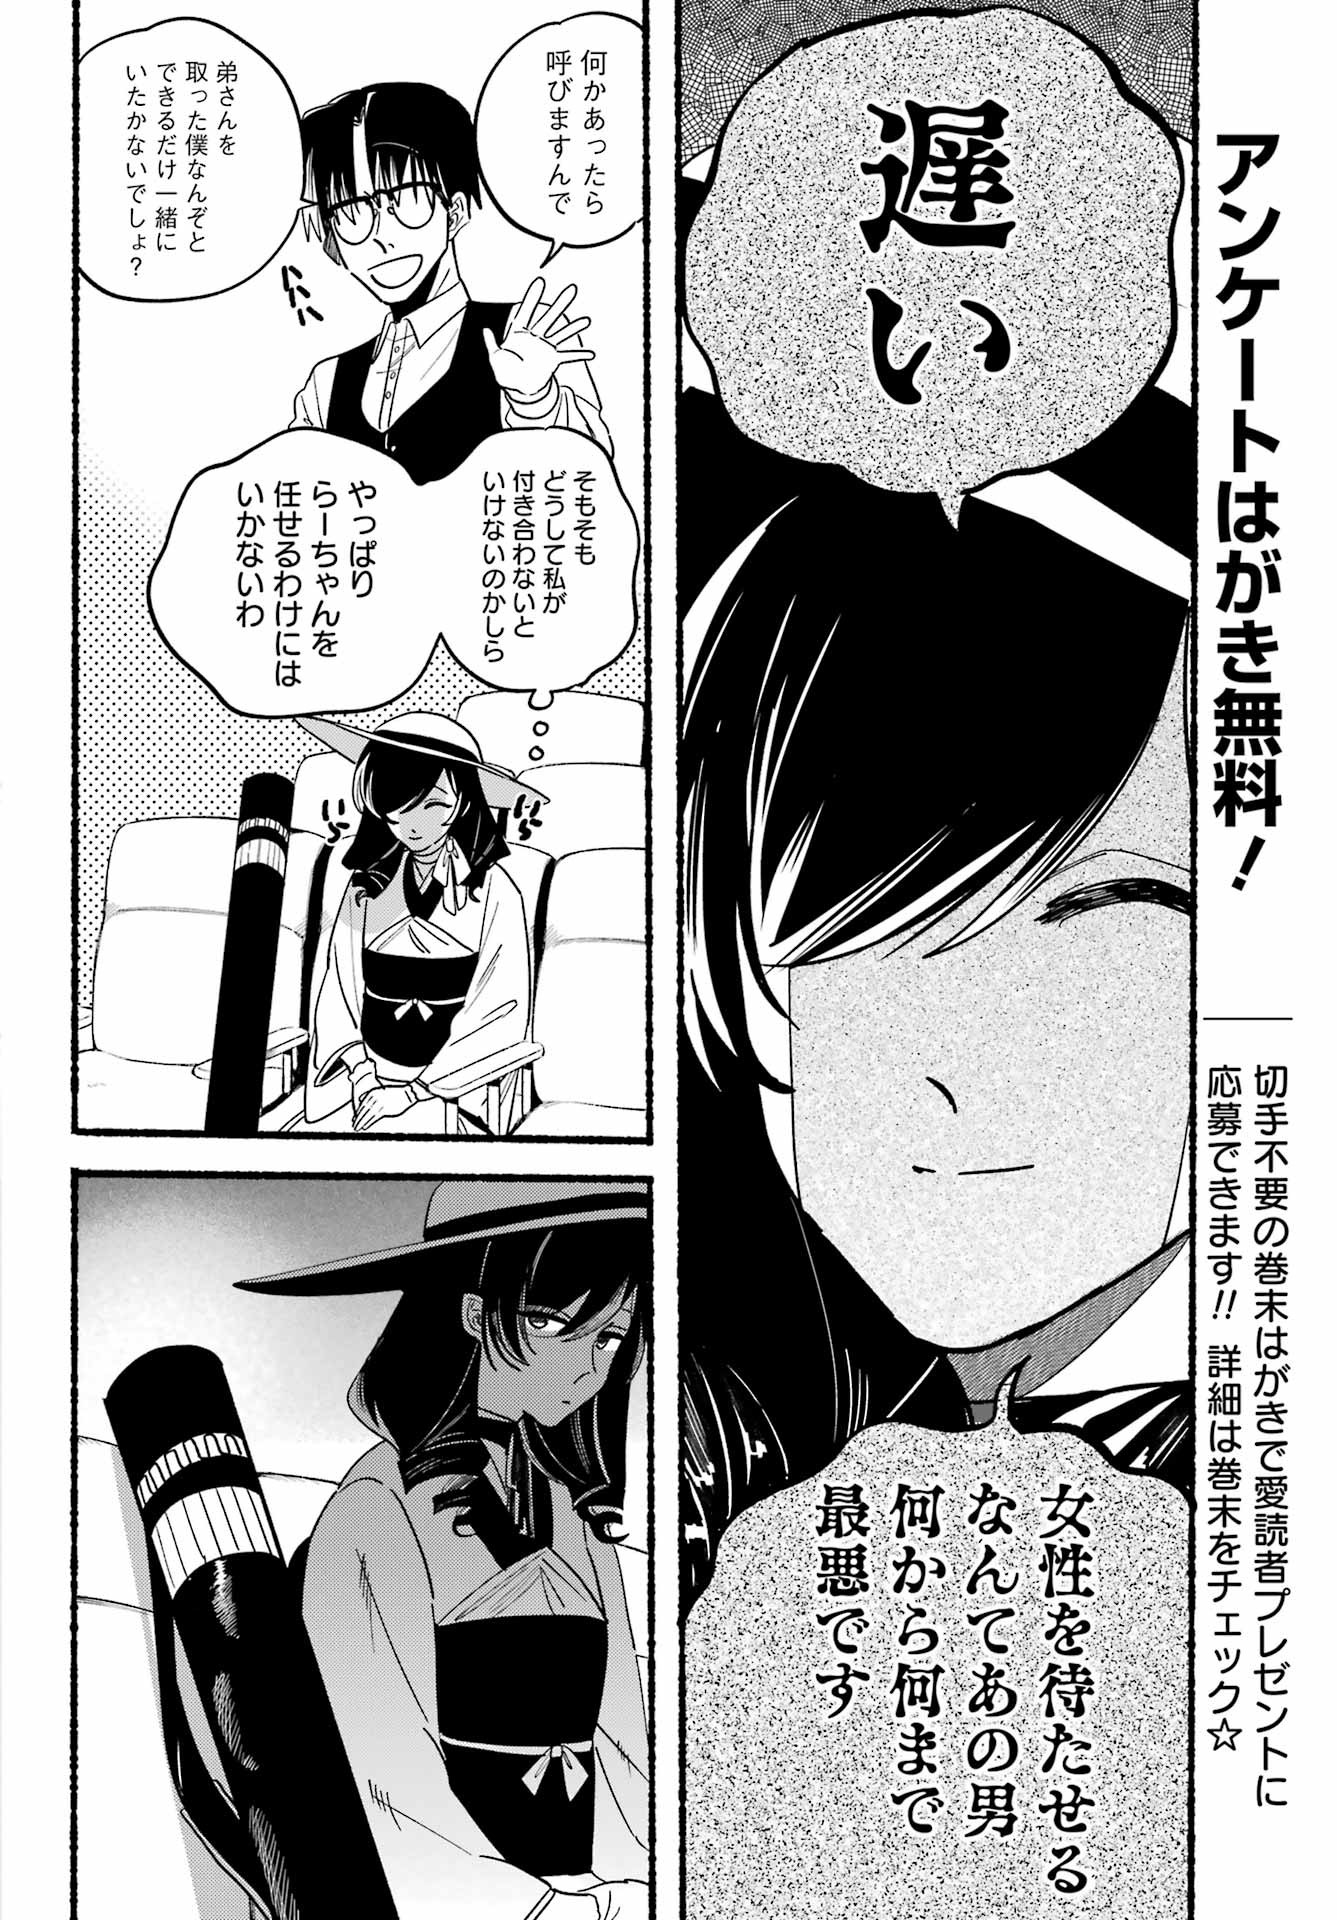 Rokurei - Tenseishi Rinne Kuyakusho Dairokkanbu Joreika Katsudouki - Chapter 17 - Page 8